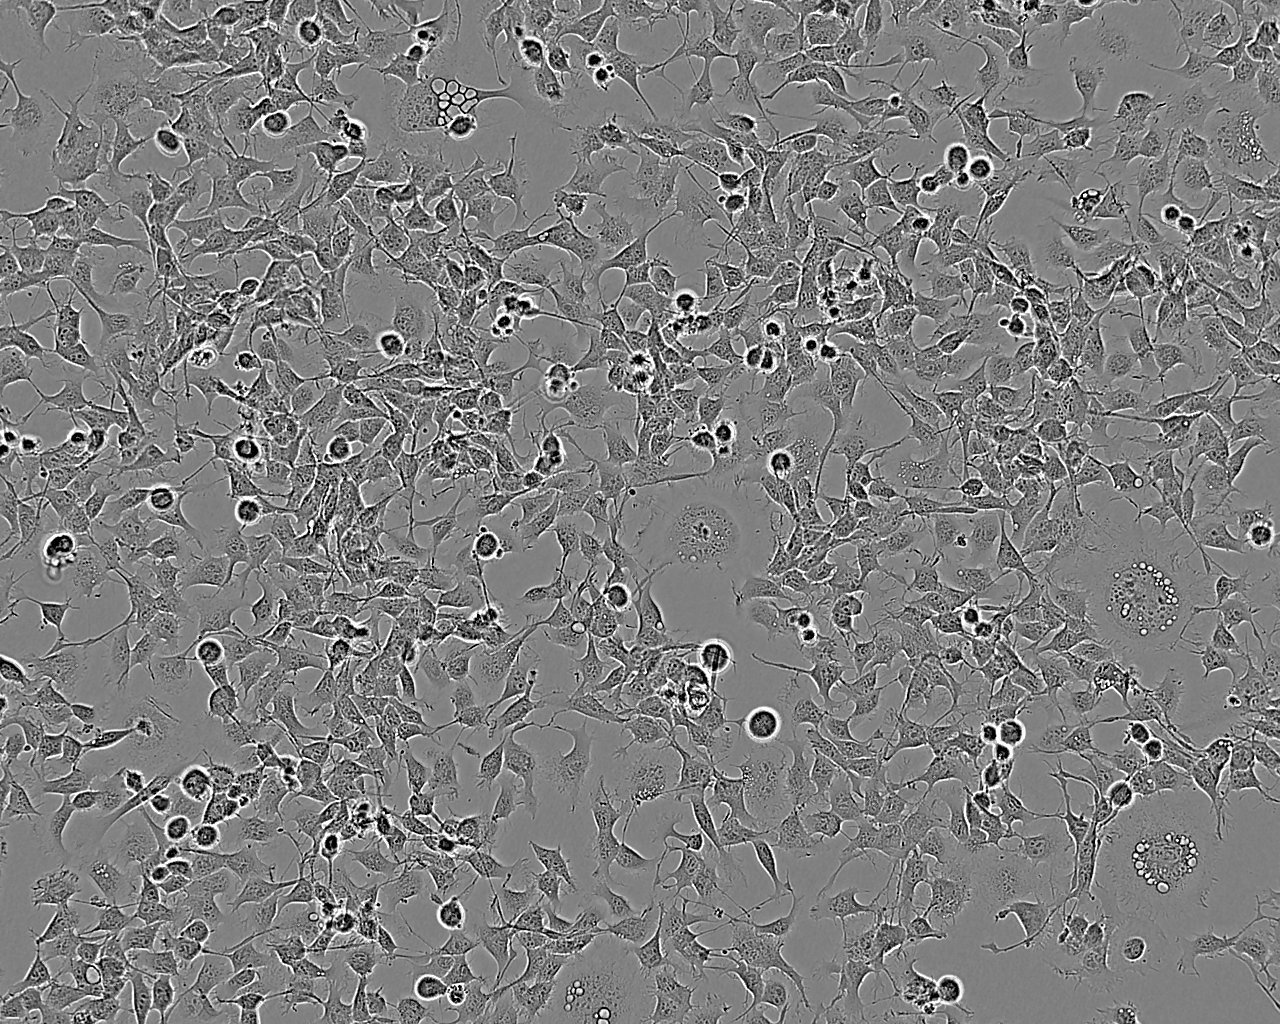 OLN-93 cell line大鼠胶质细胞系